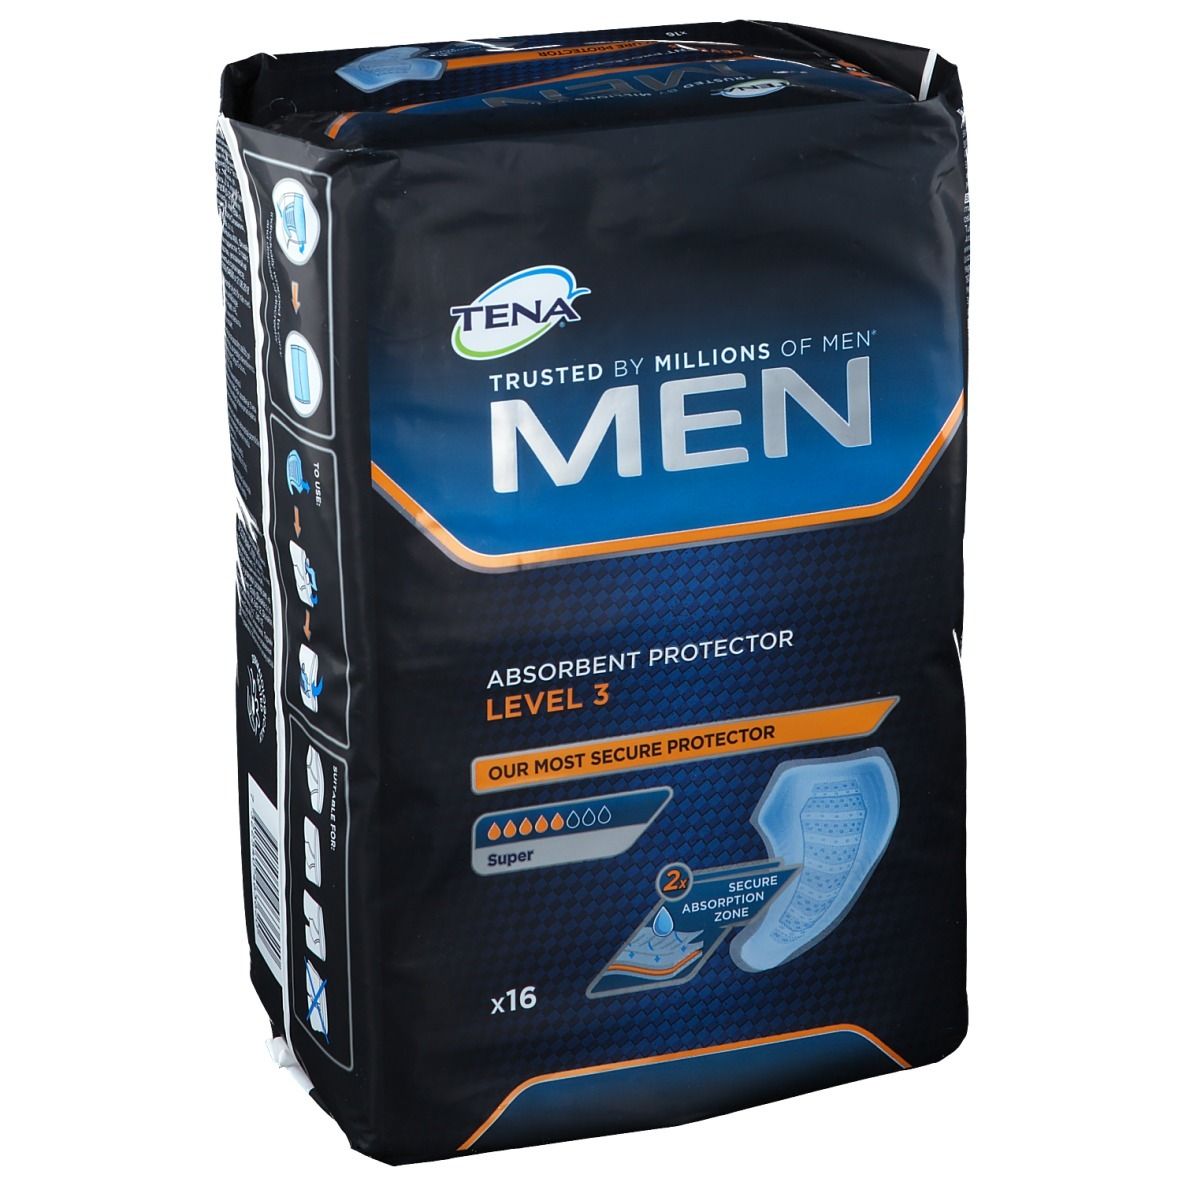 Tena® MEN Absorbent Protection Level 3